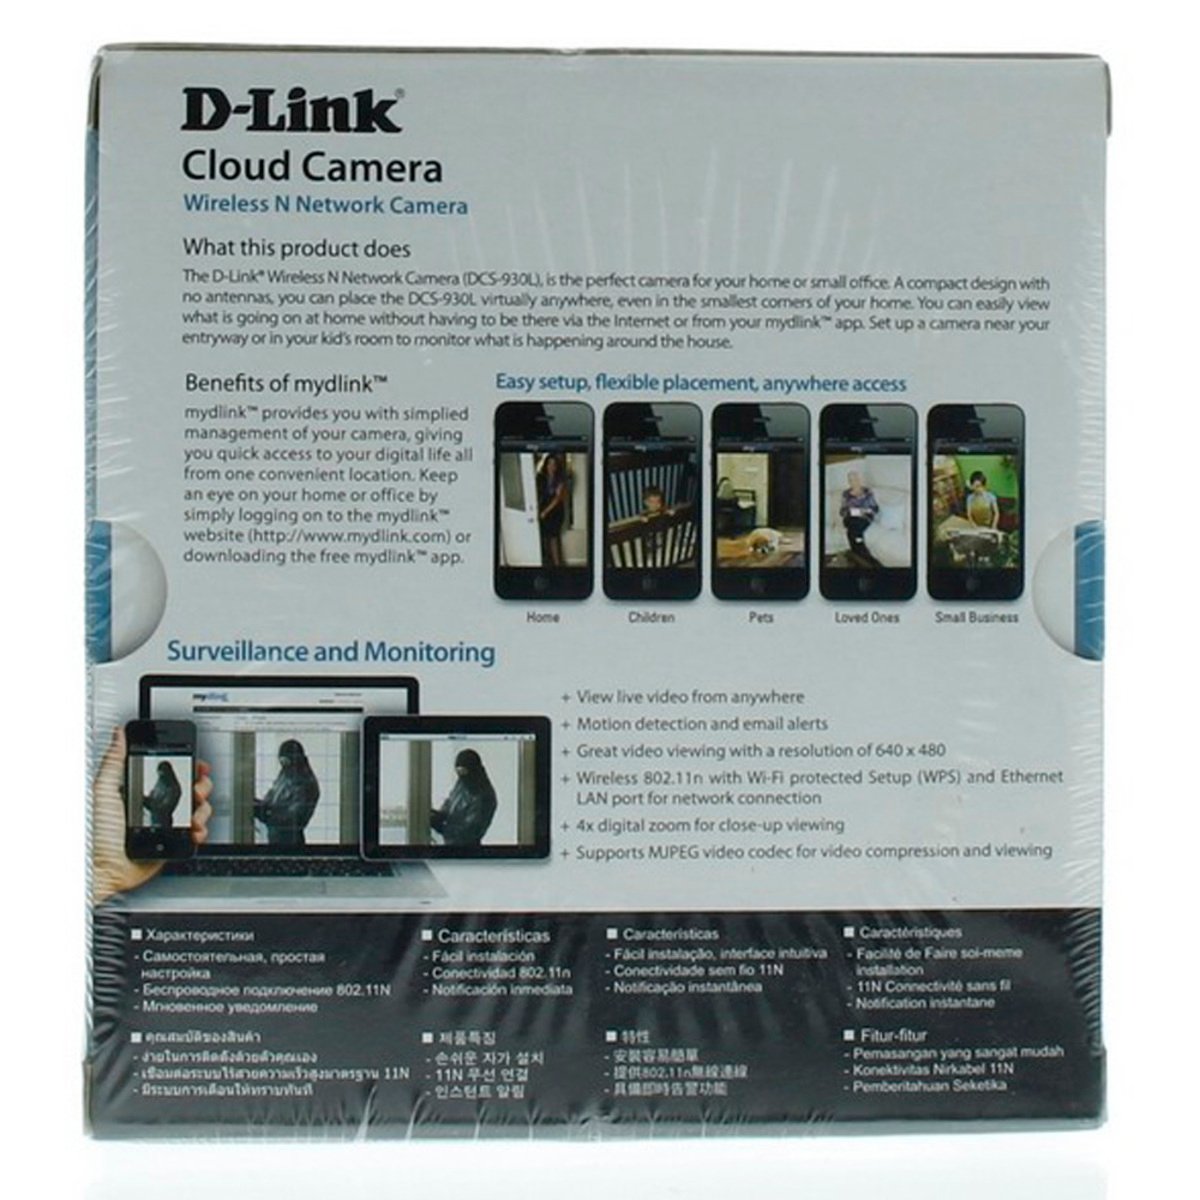 D-link Wireless IP & Network Camera DCS-930